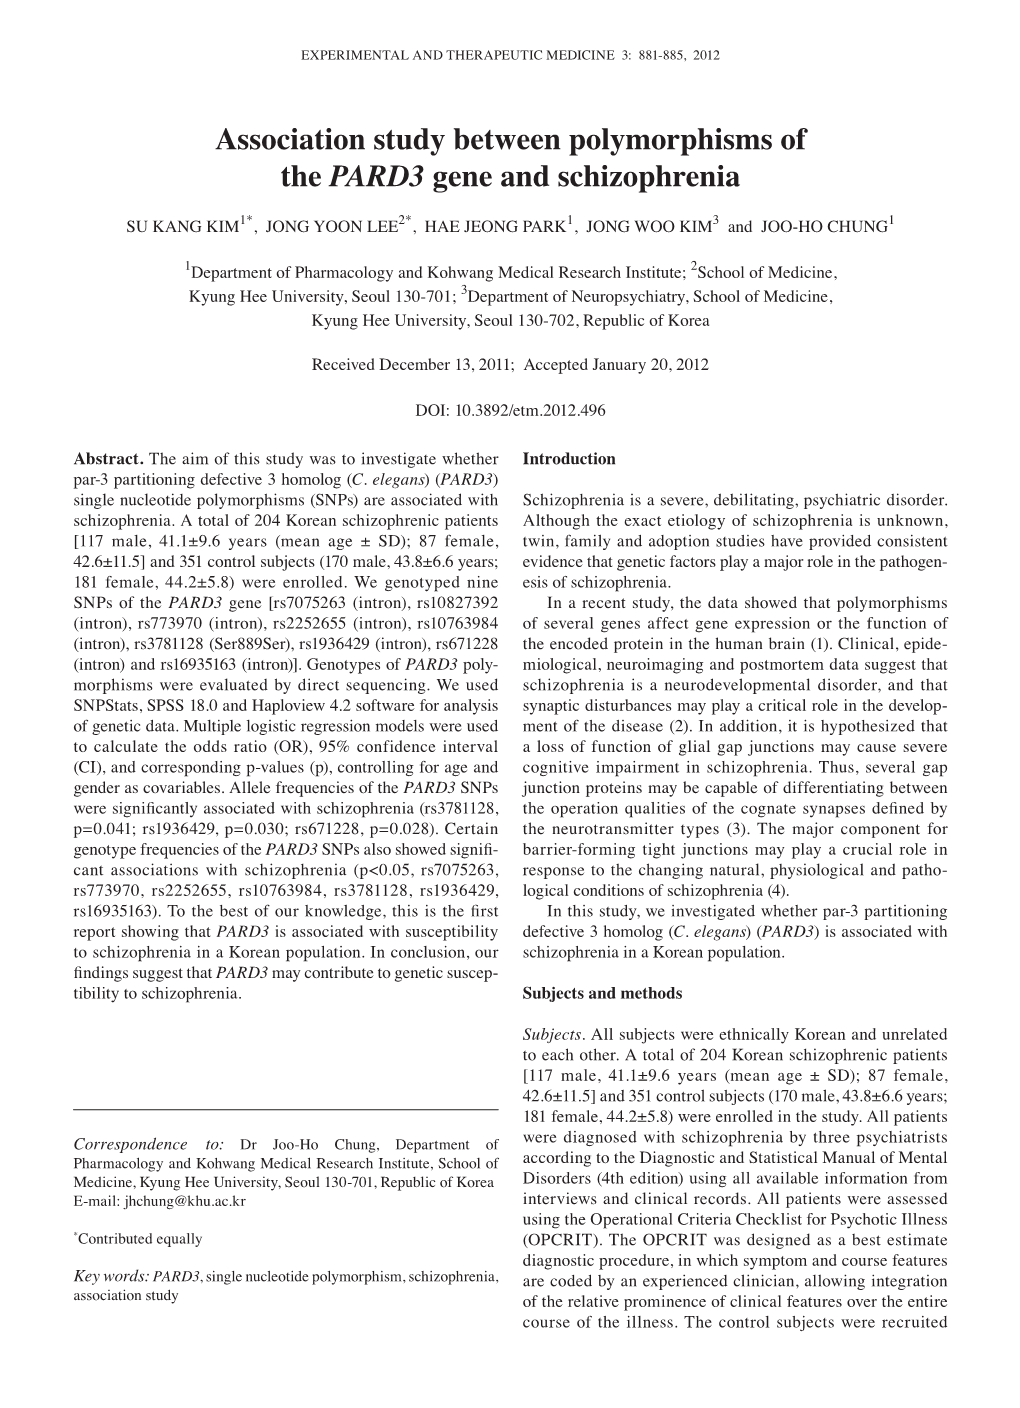 Association Study Between Polymorphisms of the PARD3 Gene and Schizophrenia